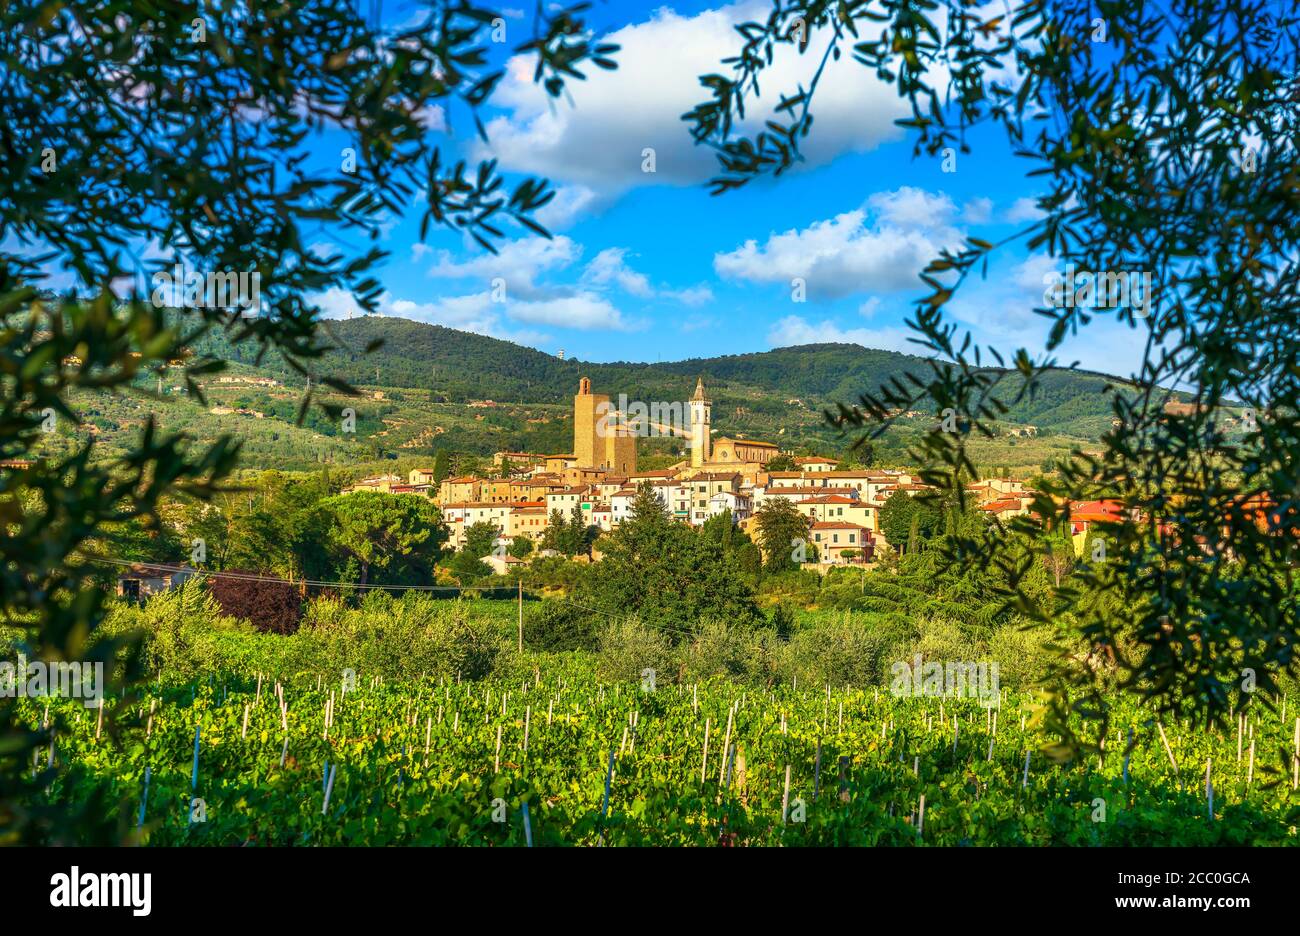 Vinci, Leonardo Geburtsort, Dorf, Weinberg und Olivenbäume. Florenz, Toskana Italien Europa. Stockfoto